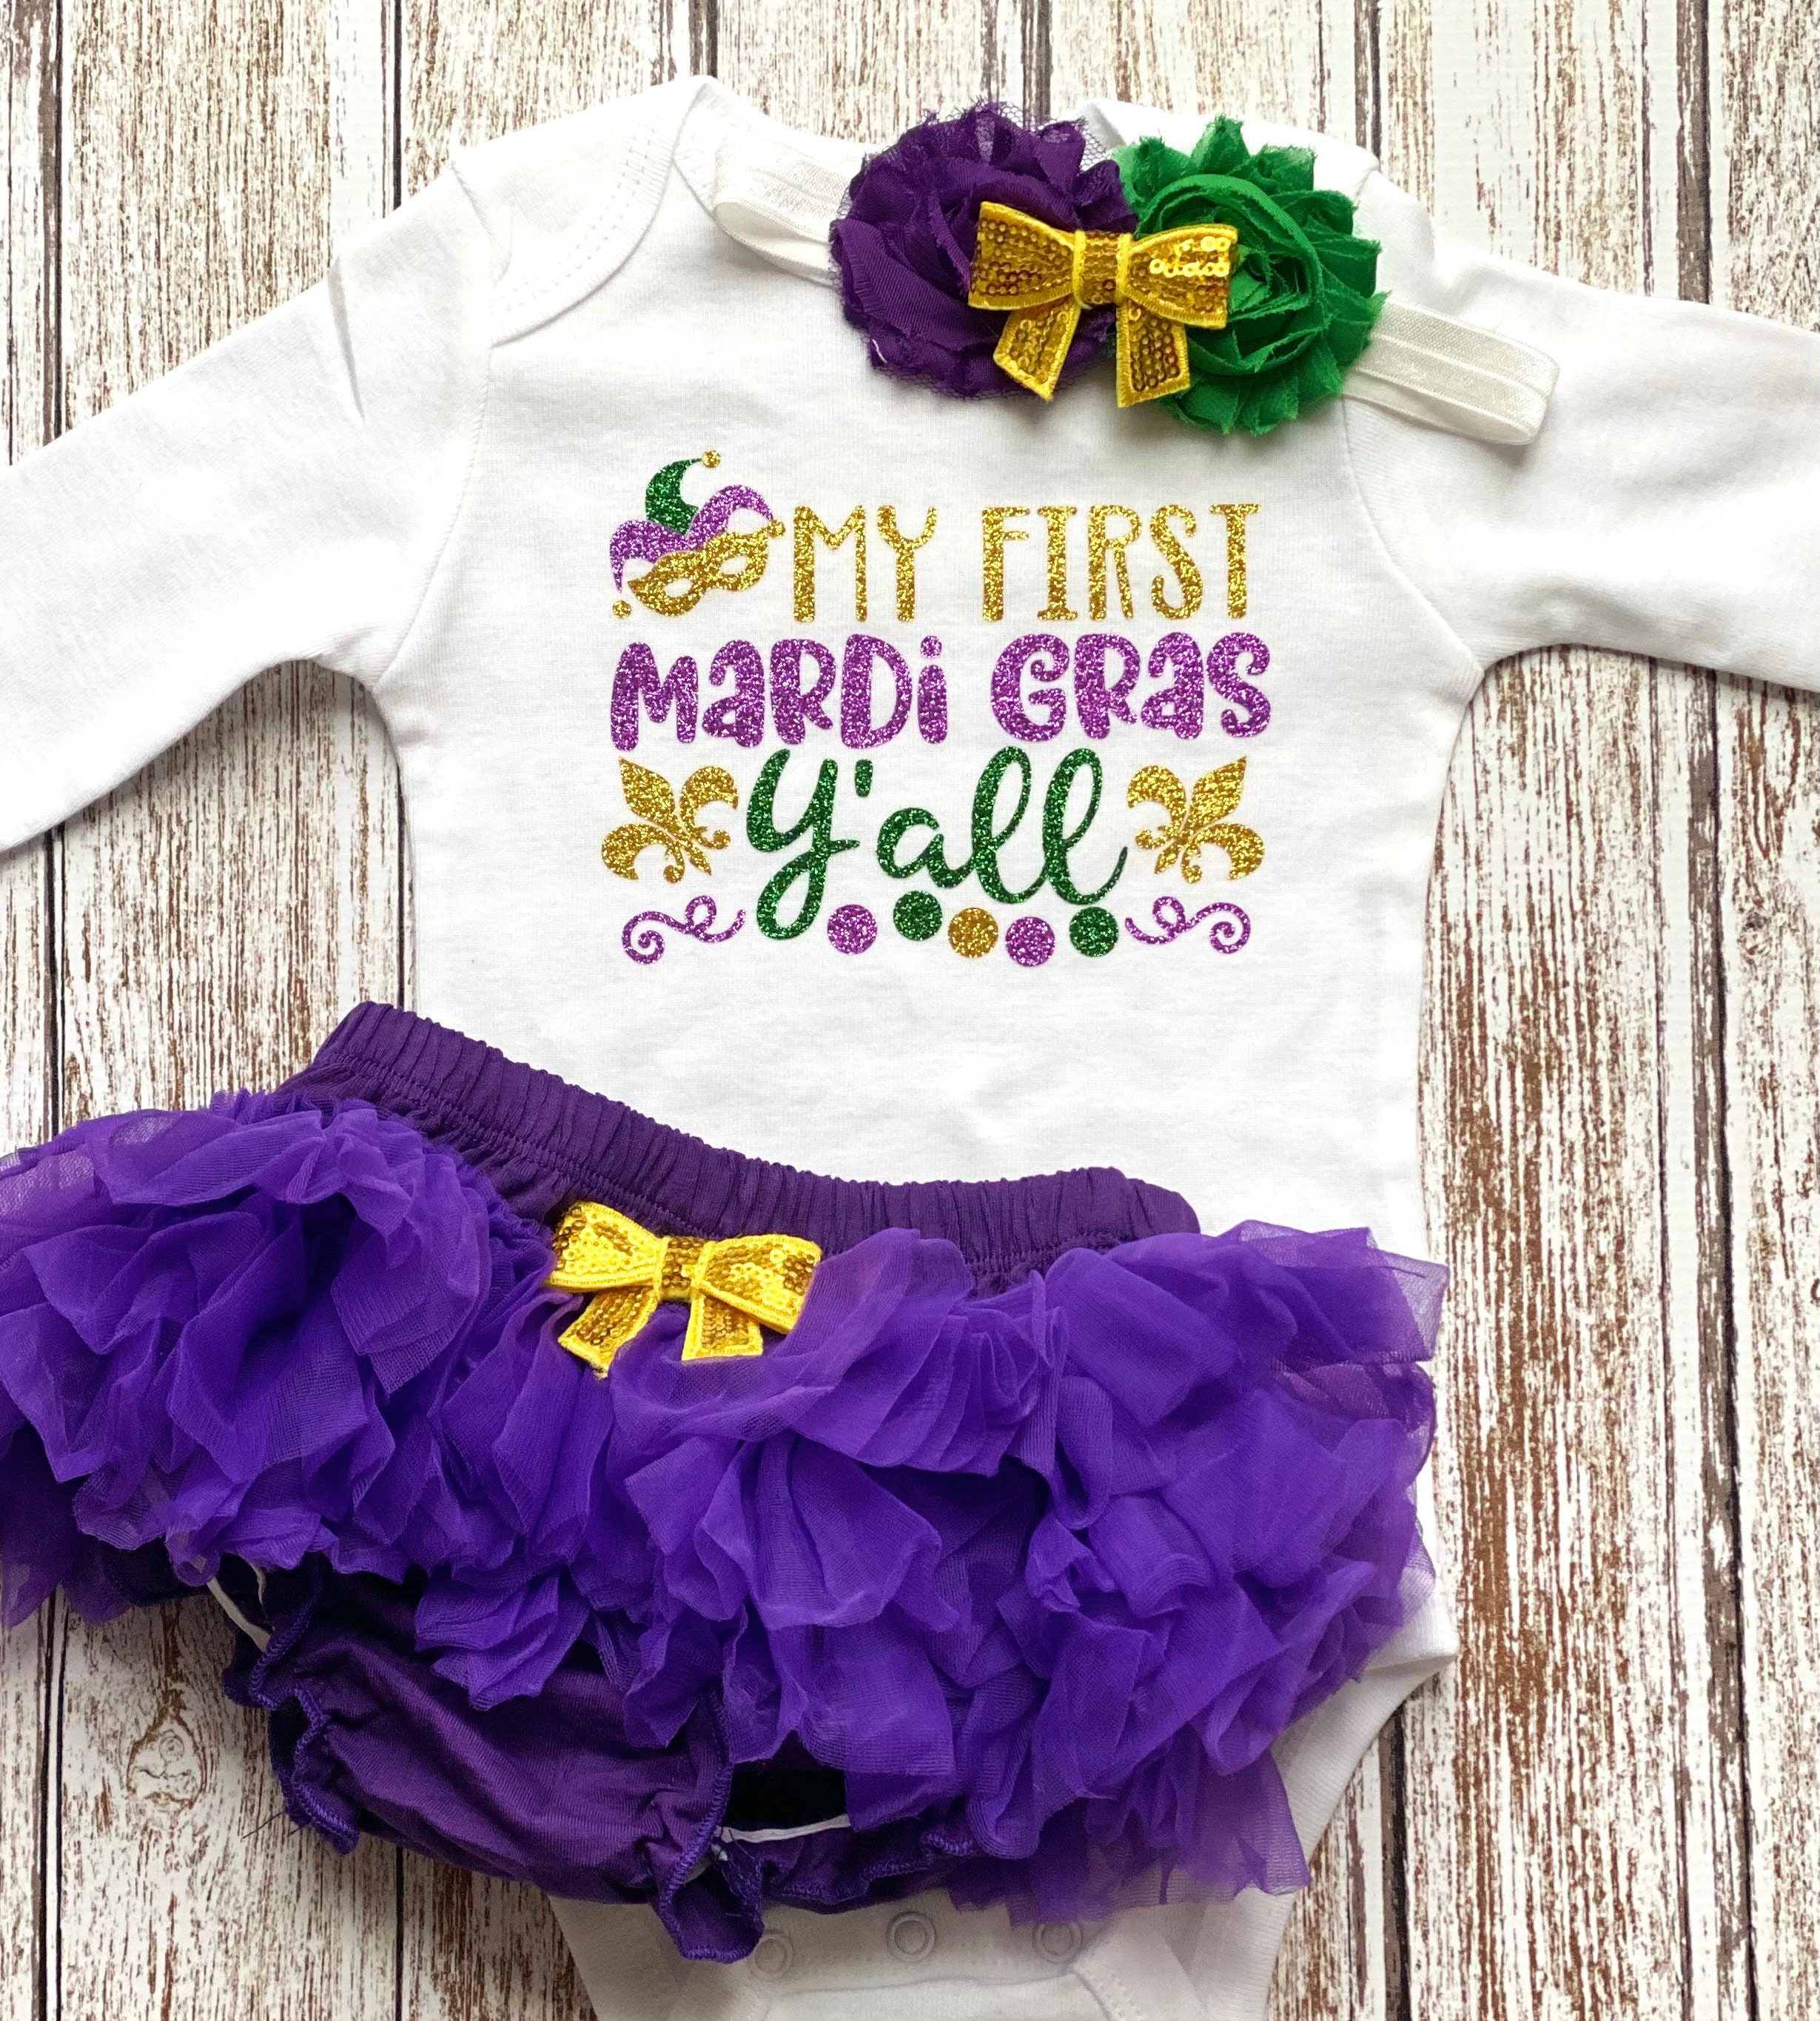 Baby Kids I Love Mardi Gras Heart Fluer De Lis Onesies Bodysuits as picture24 Months 